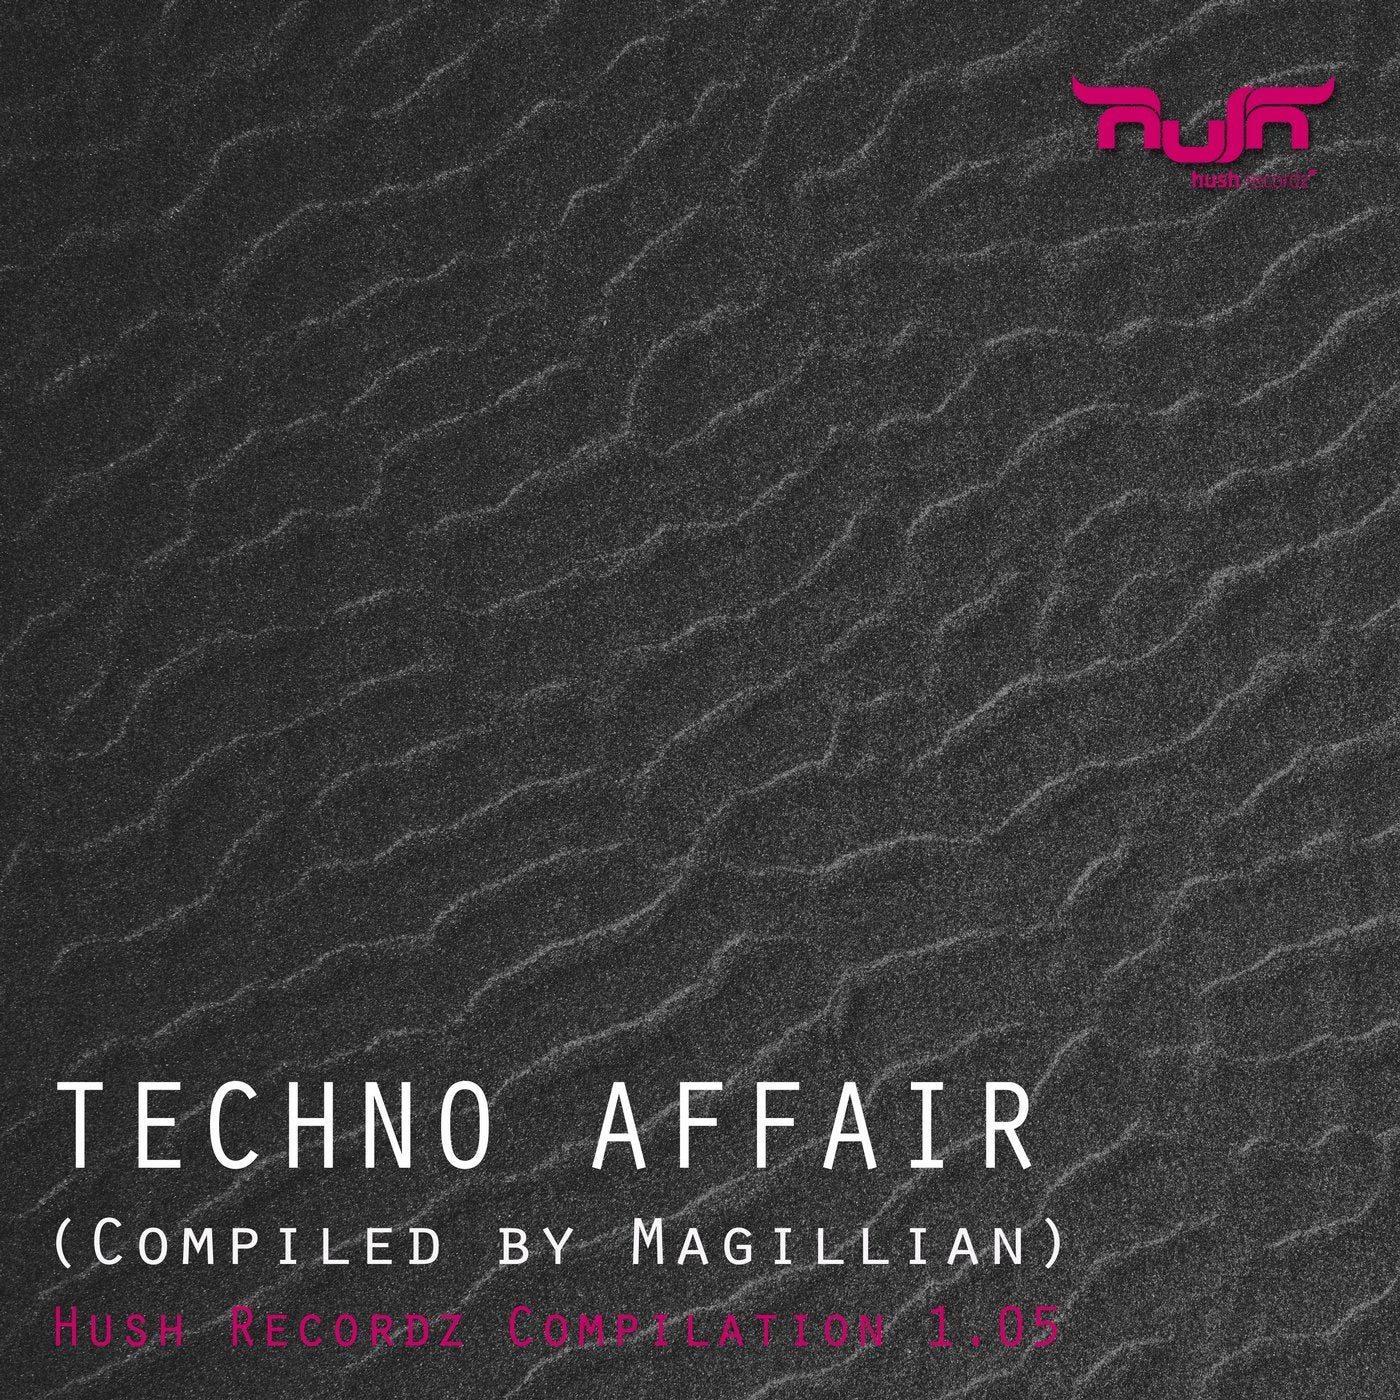 Techno Affair